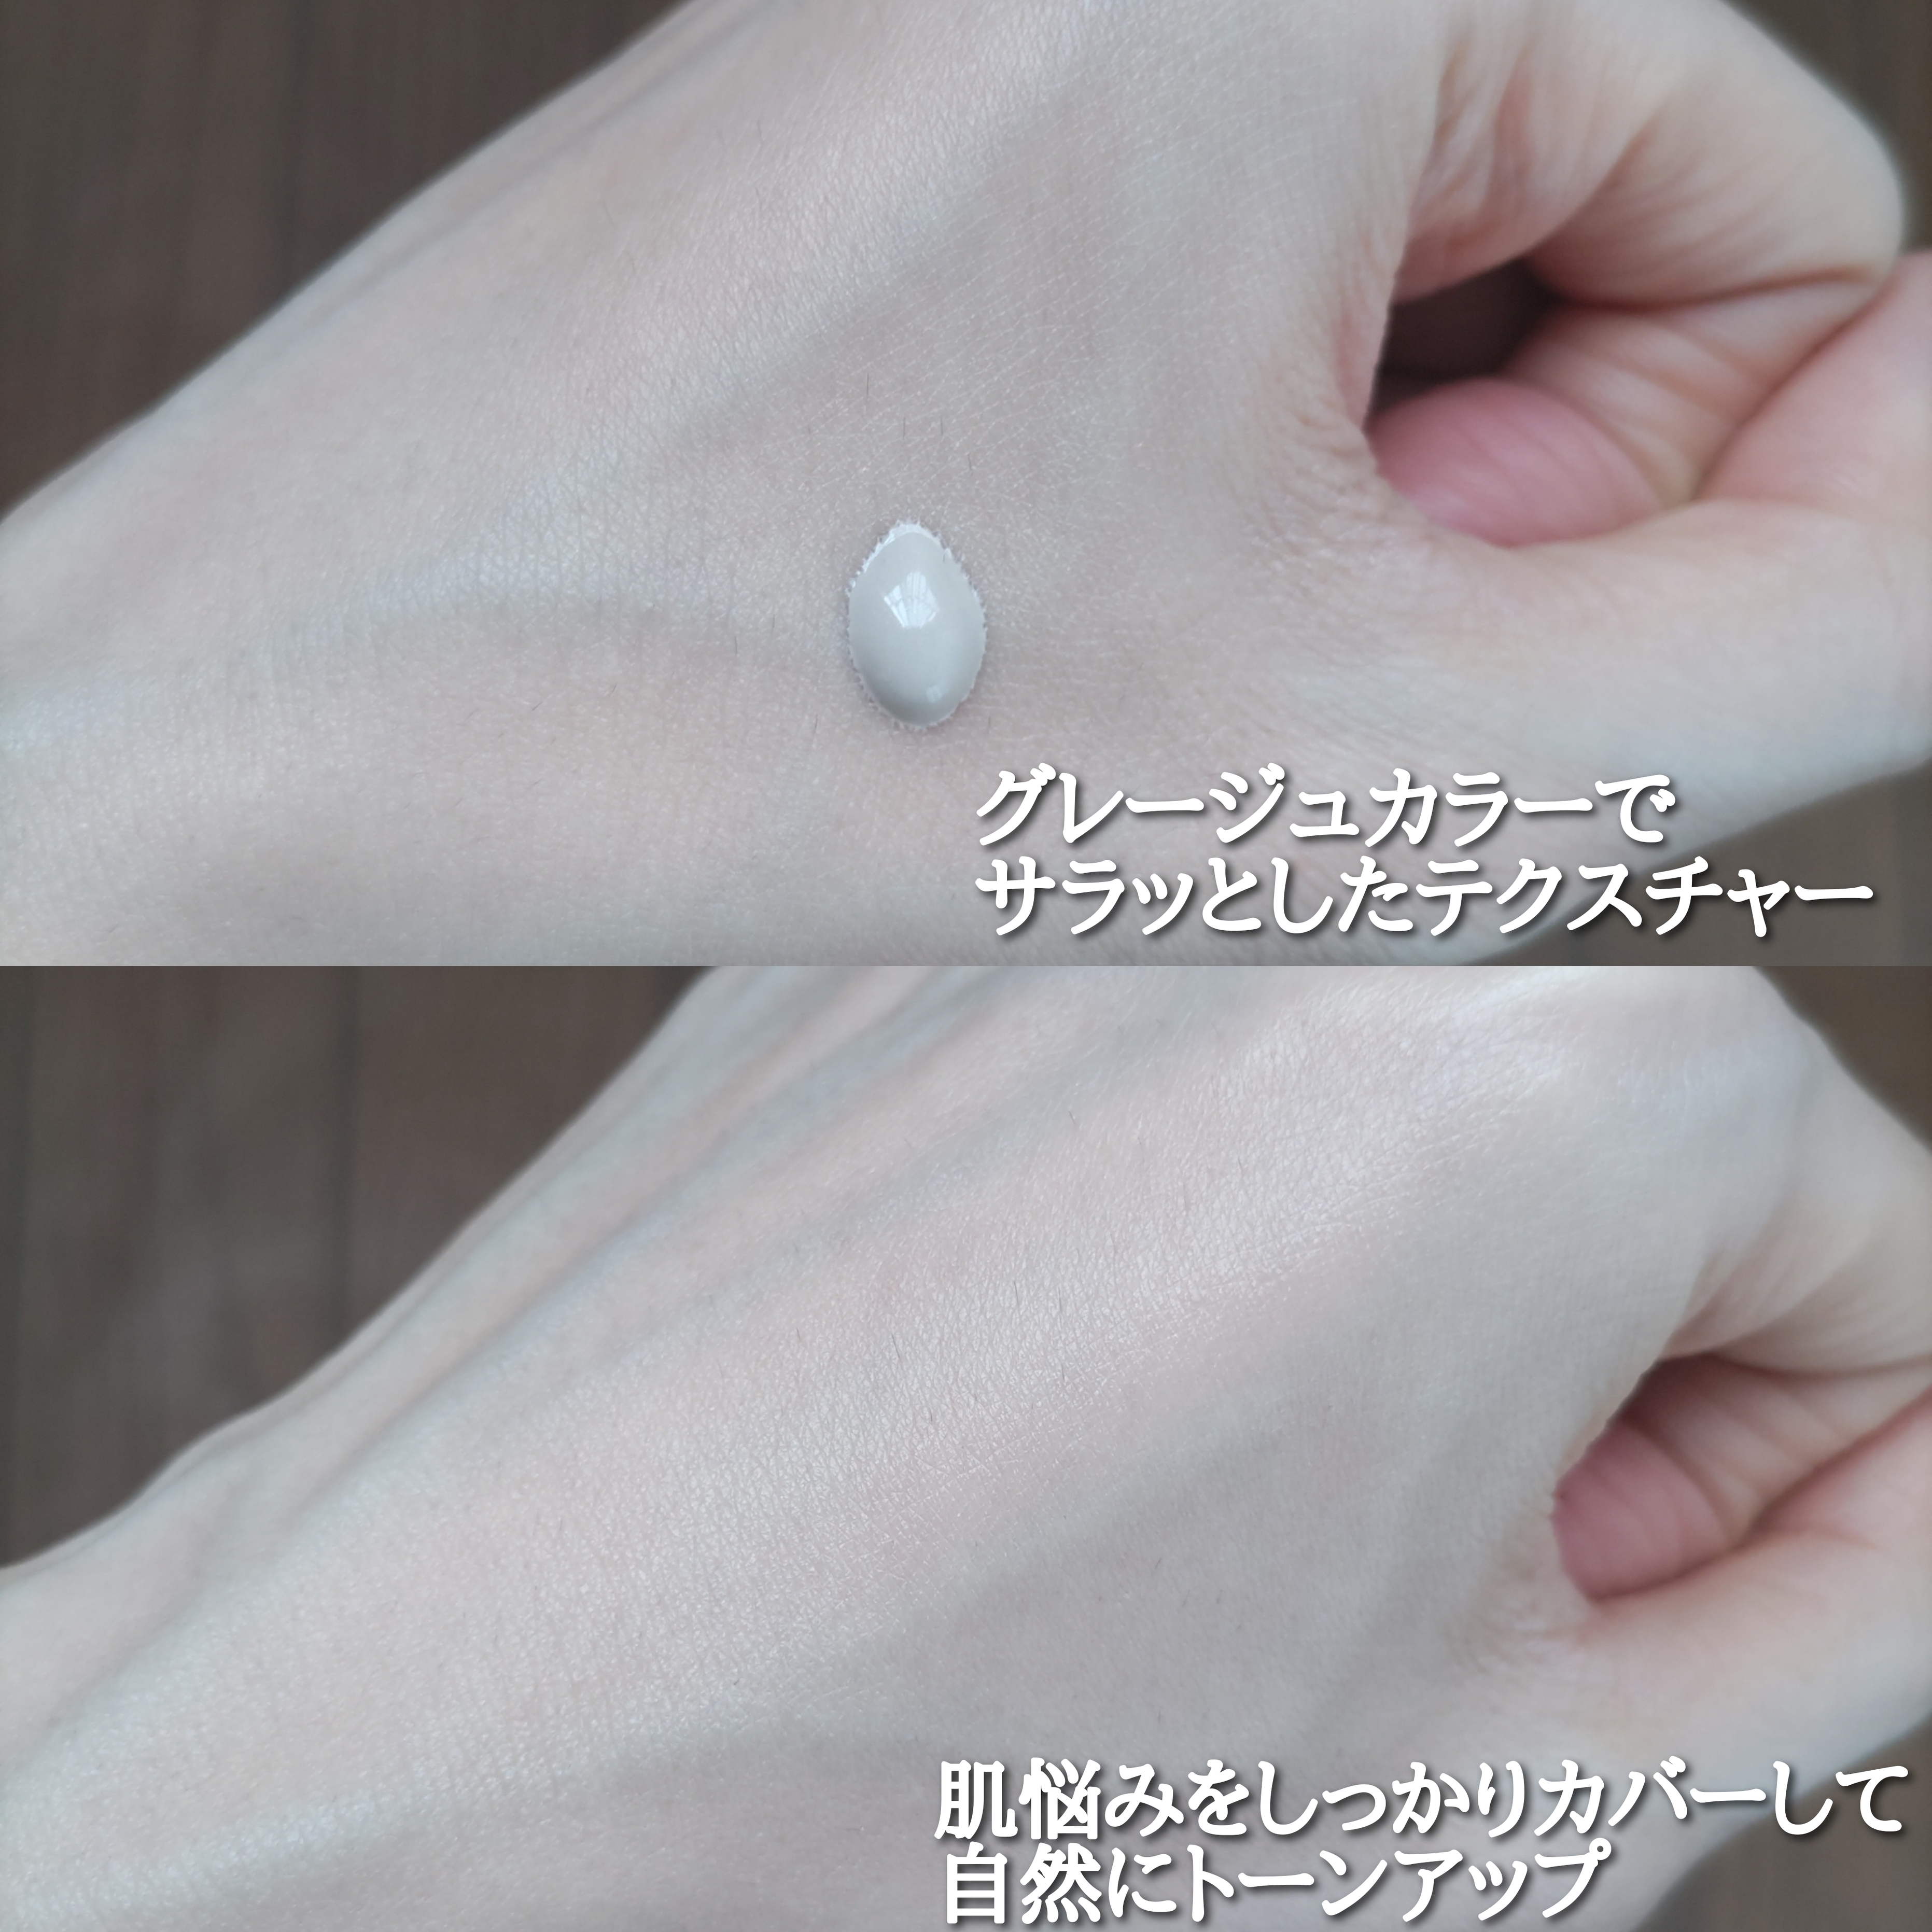 RACO キープスキンベース　(乾燥崩れ防止)を使ったYuKaRi♡さんのクチコミ画像4